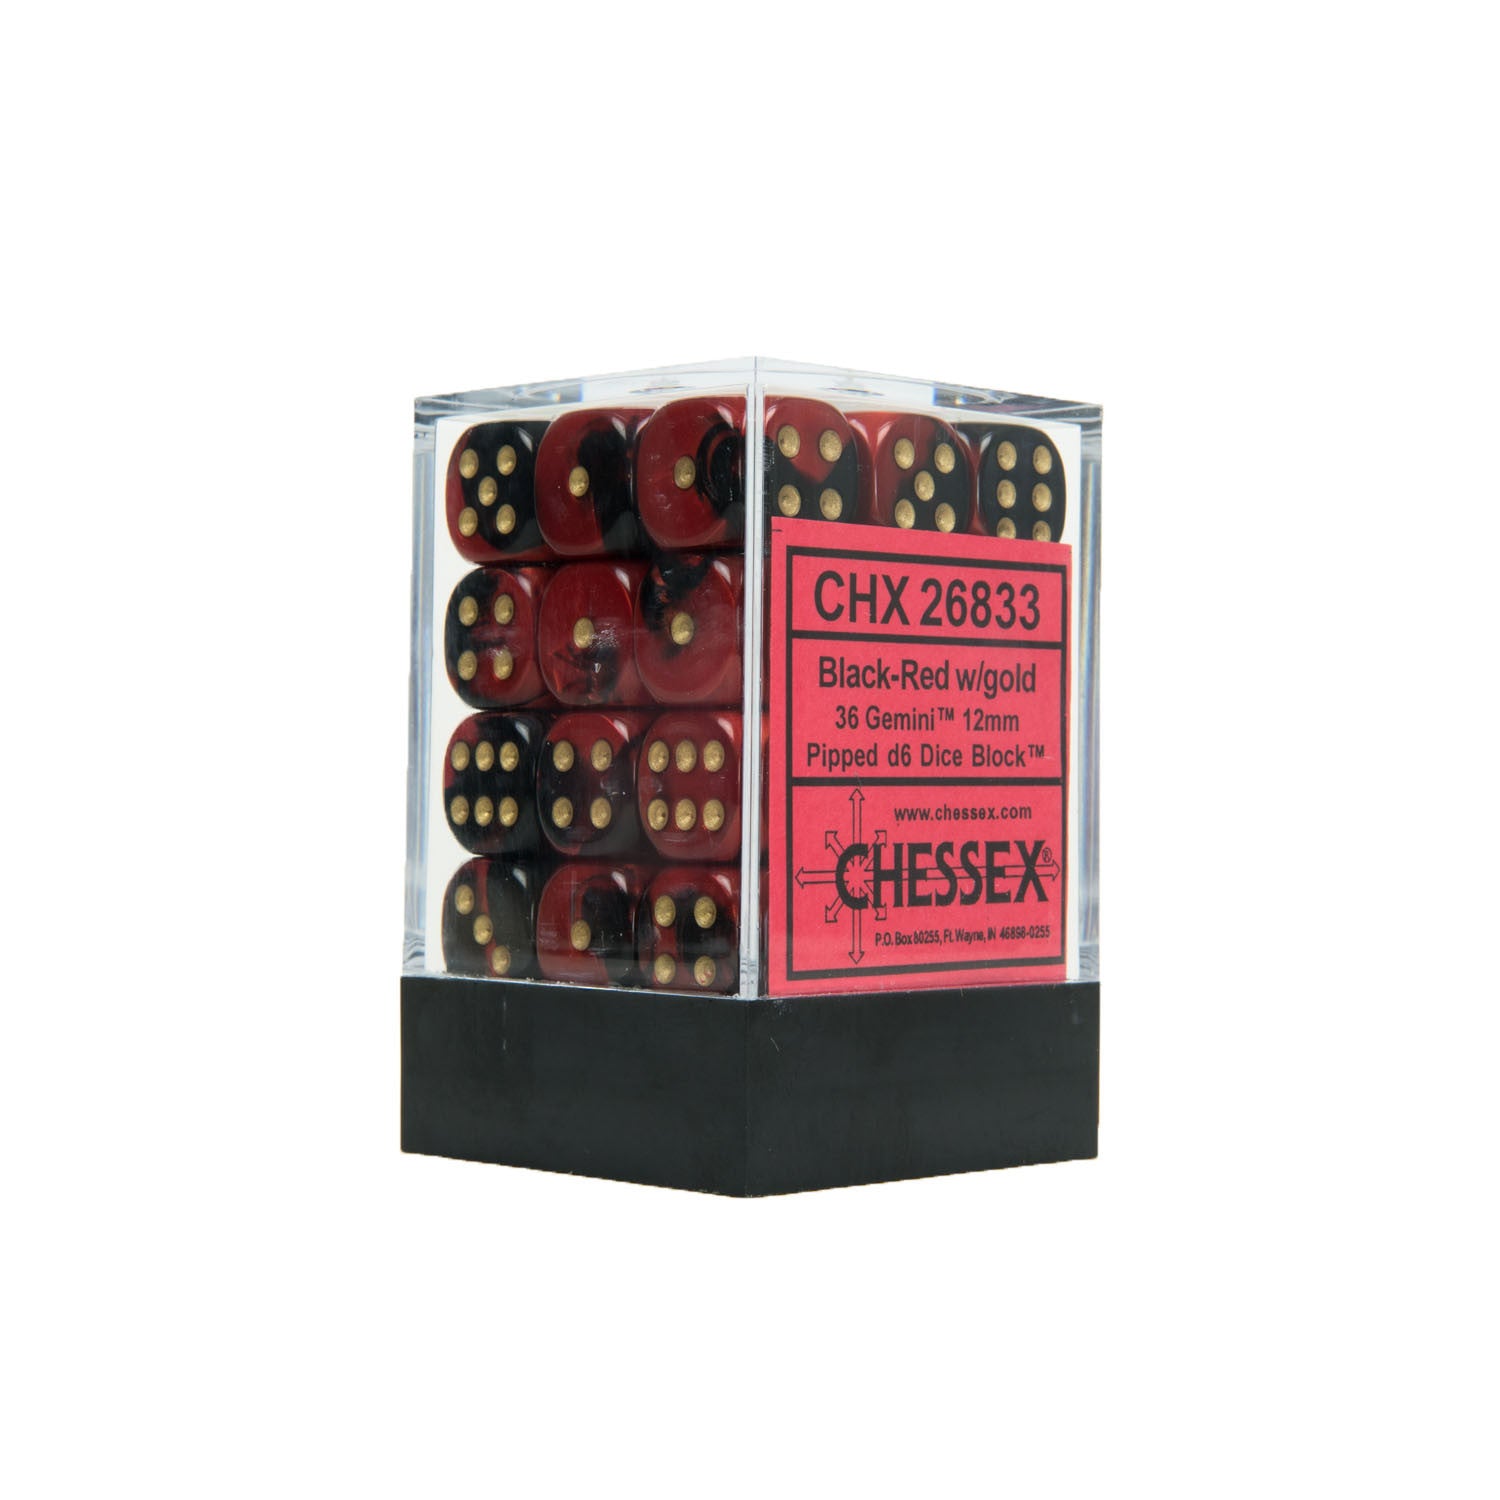 Chessex CHX26833 36 Black-Red w/ gold Gemini 12mm d6 Dice Block